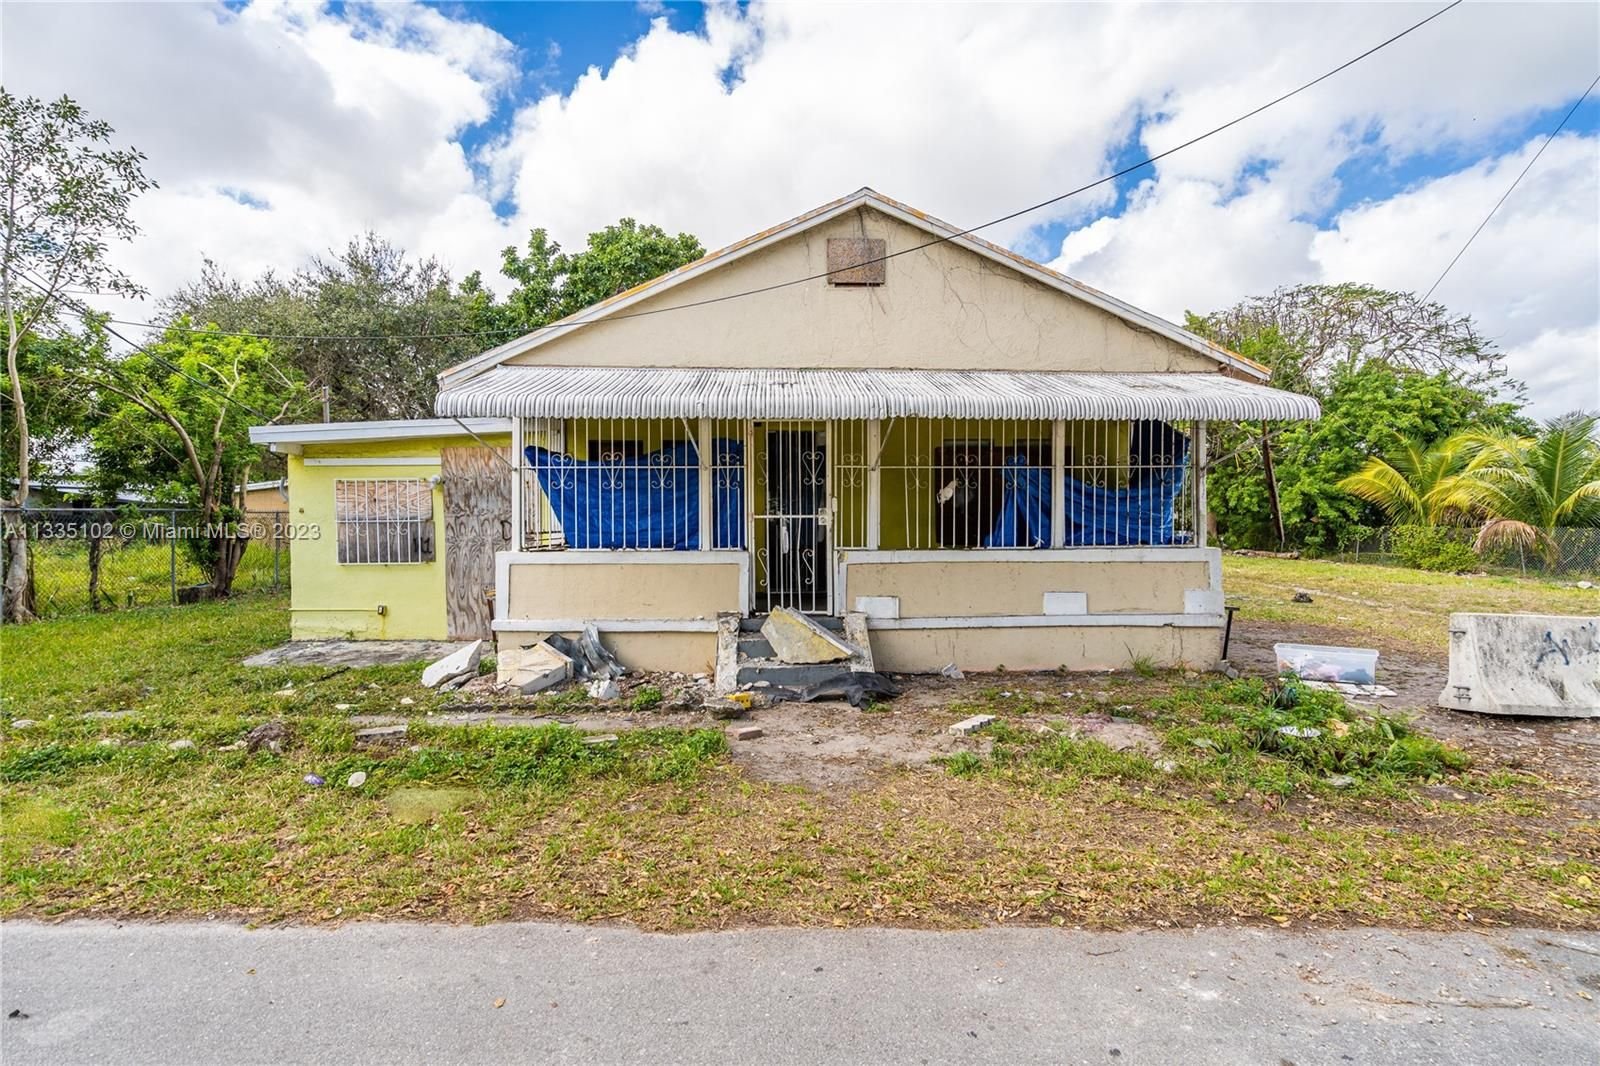 Real estate property located at 6318 19th Ct, Miami-Dade County, Miami, FL